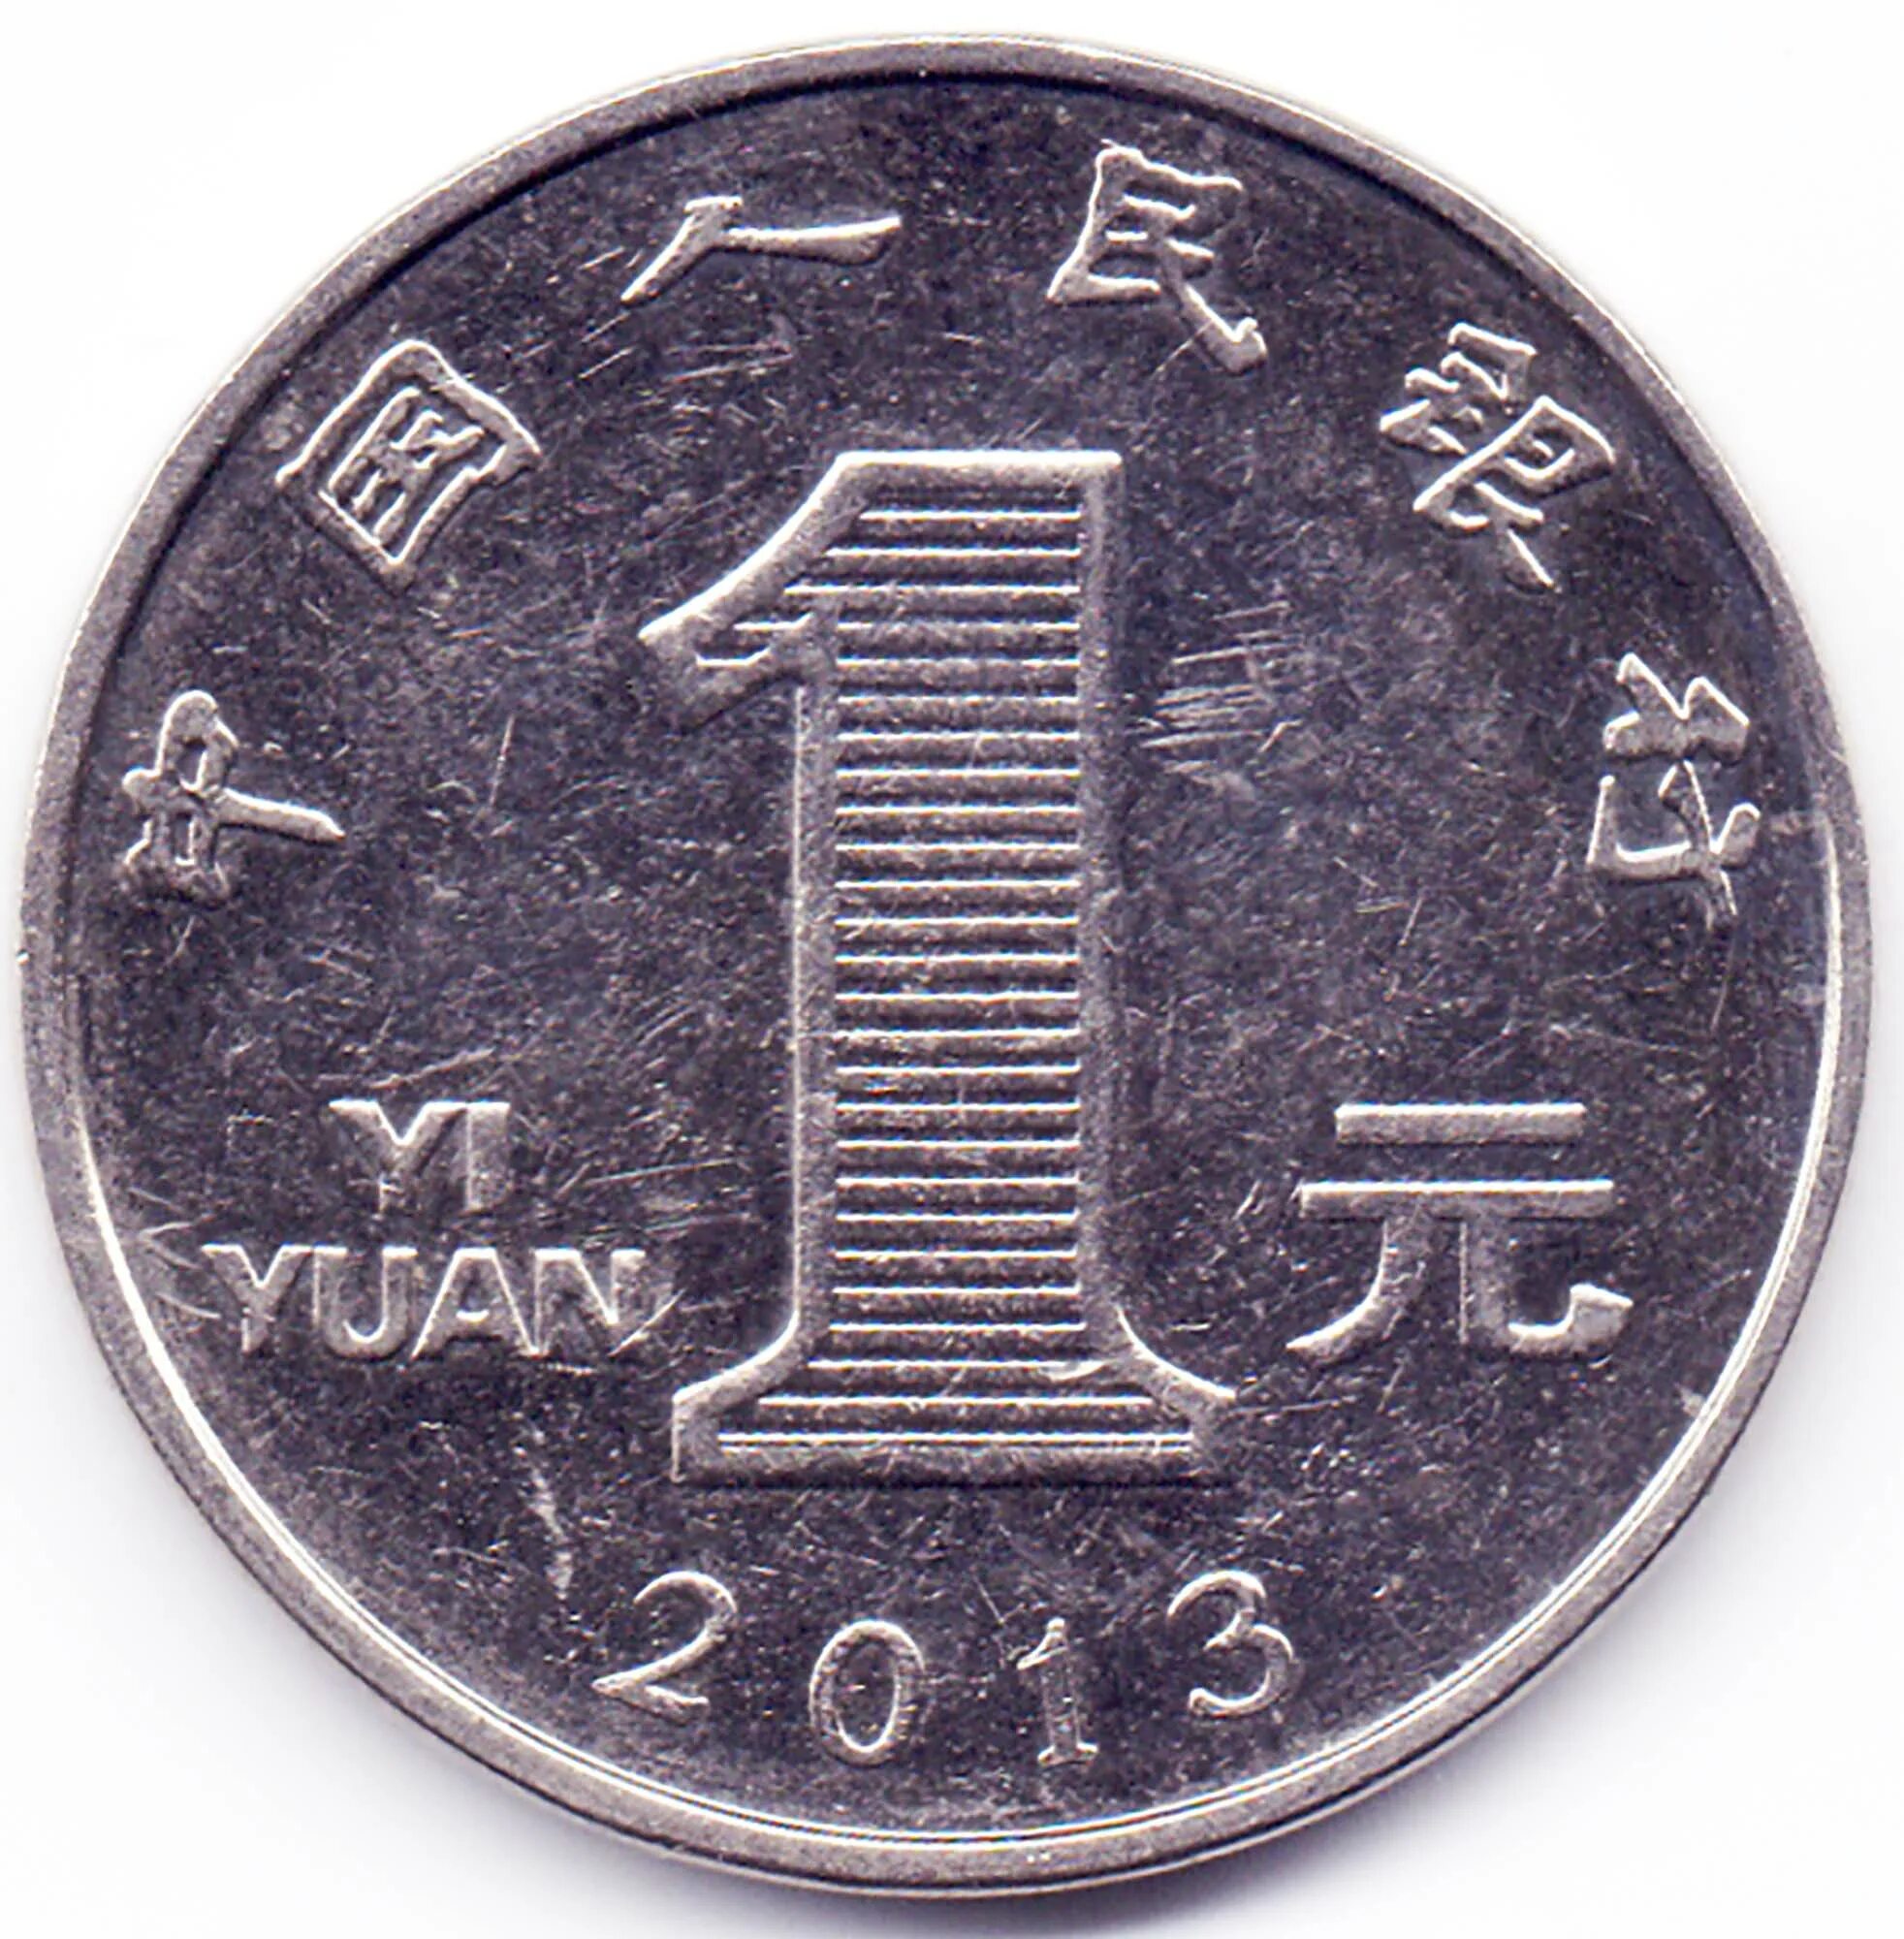 Китайский юань монеты. Монета yi Jiao. 1 Цзяо монета. Монеты Китая 1 Цзяо. Китай 1 юань.